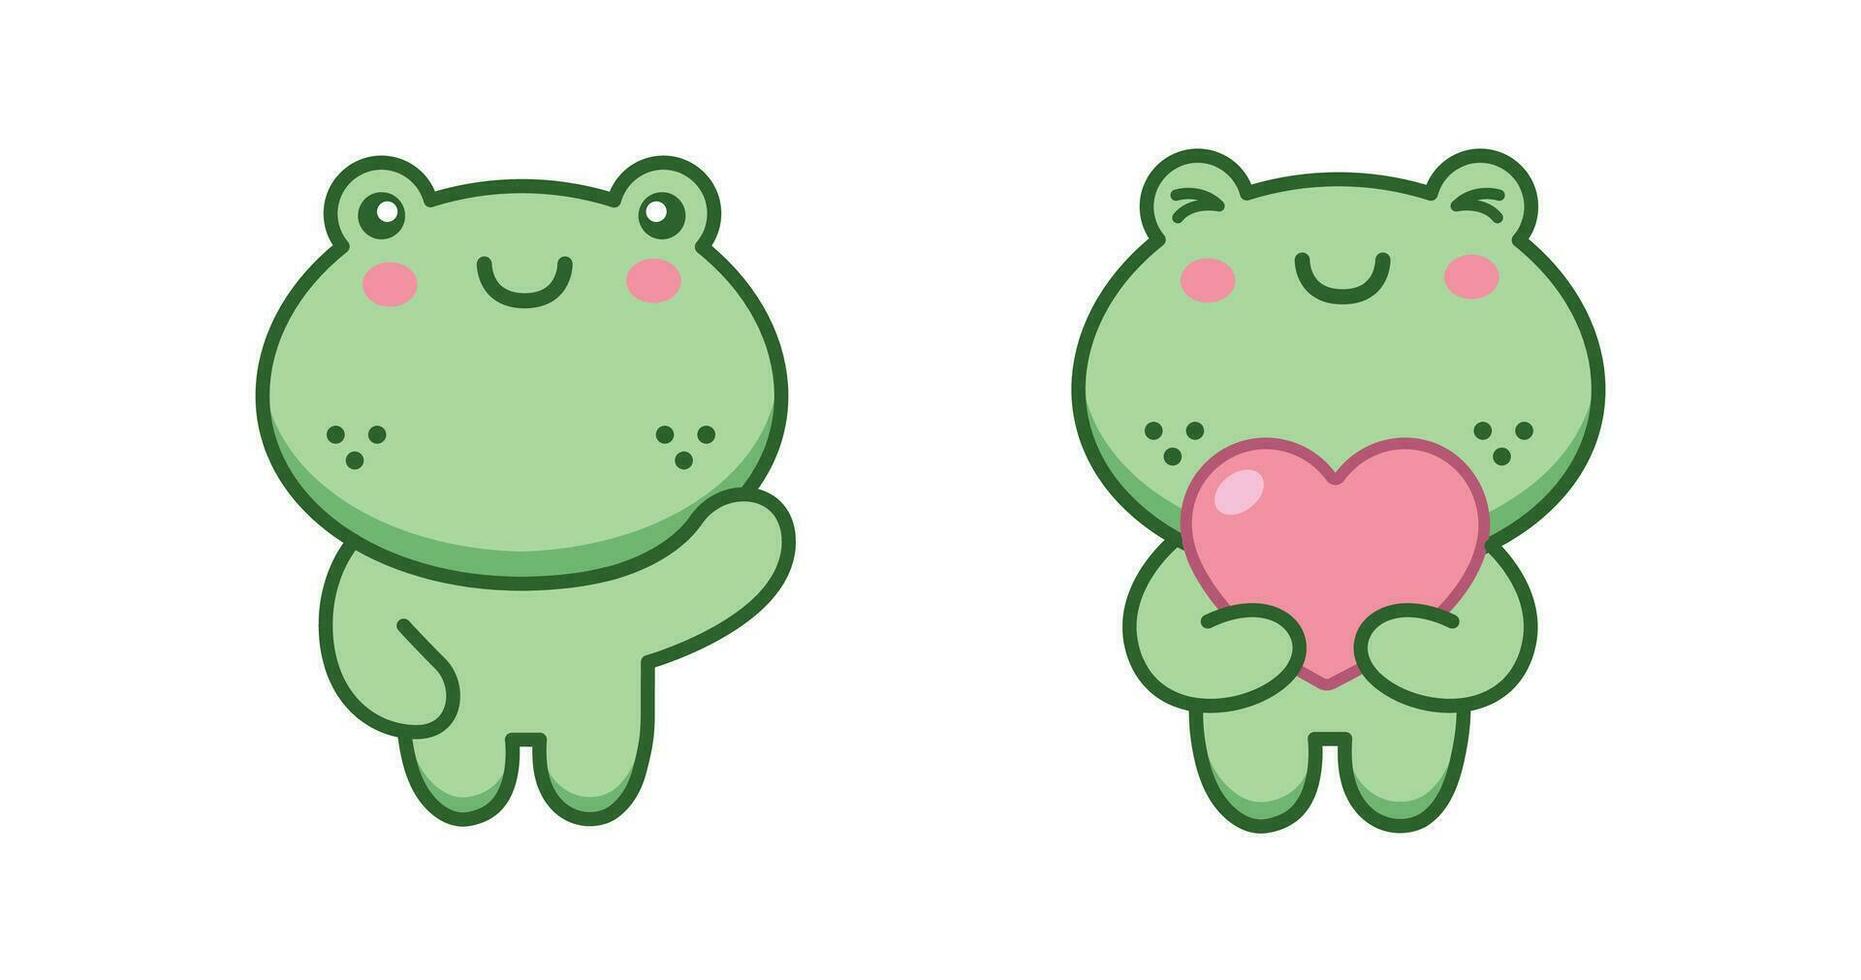 schattig kawaii kikker, kikkerachtig, Holding liefde, kikker zeggen Hoi clip art illustratie vector